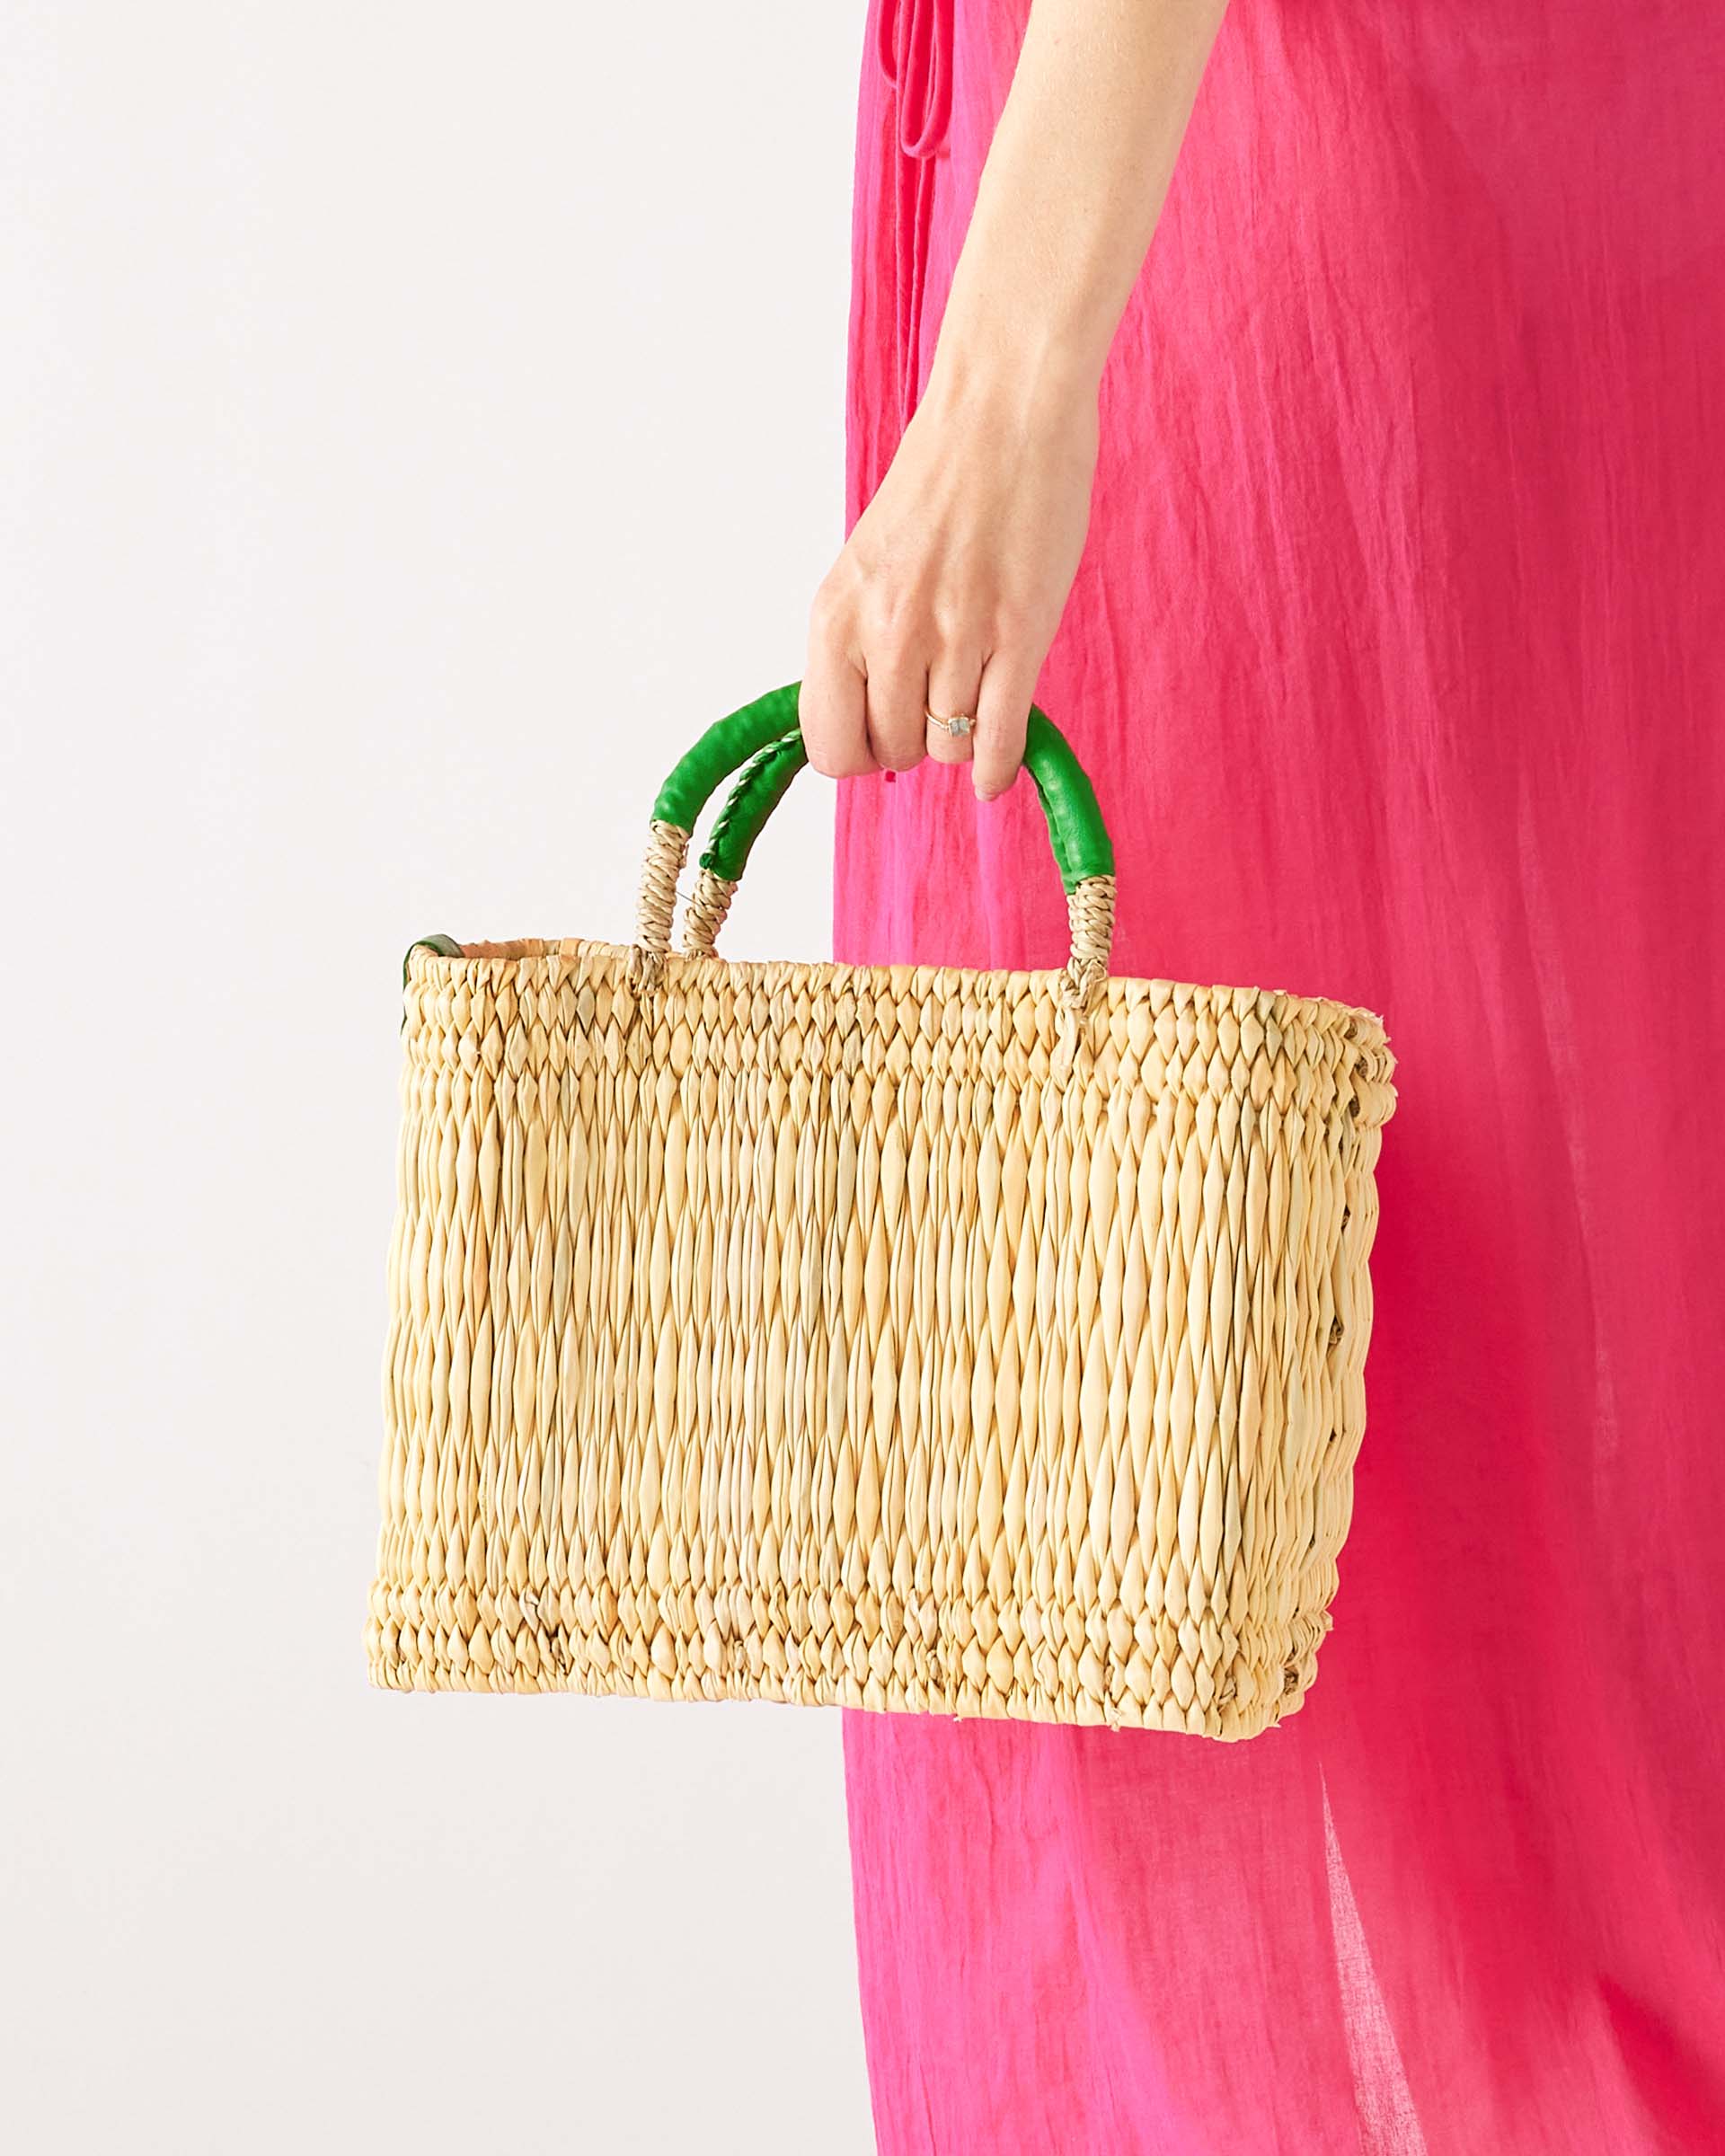 woman holding medina market basket with green handles